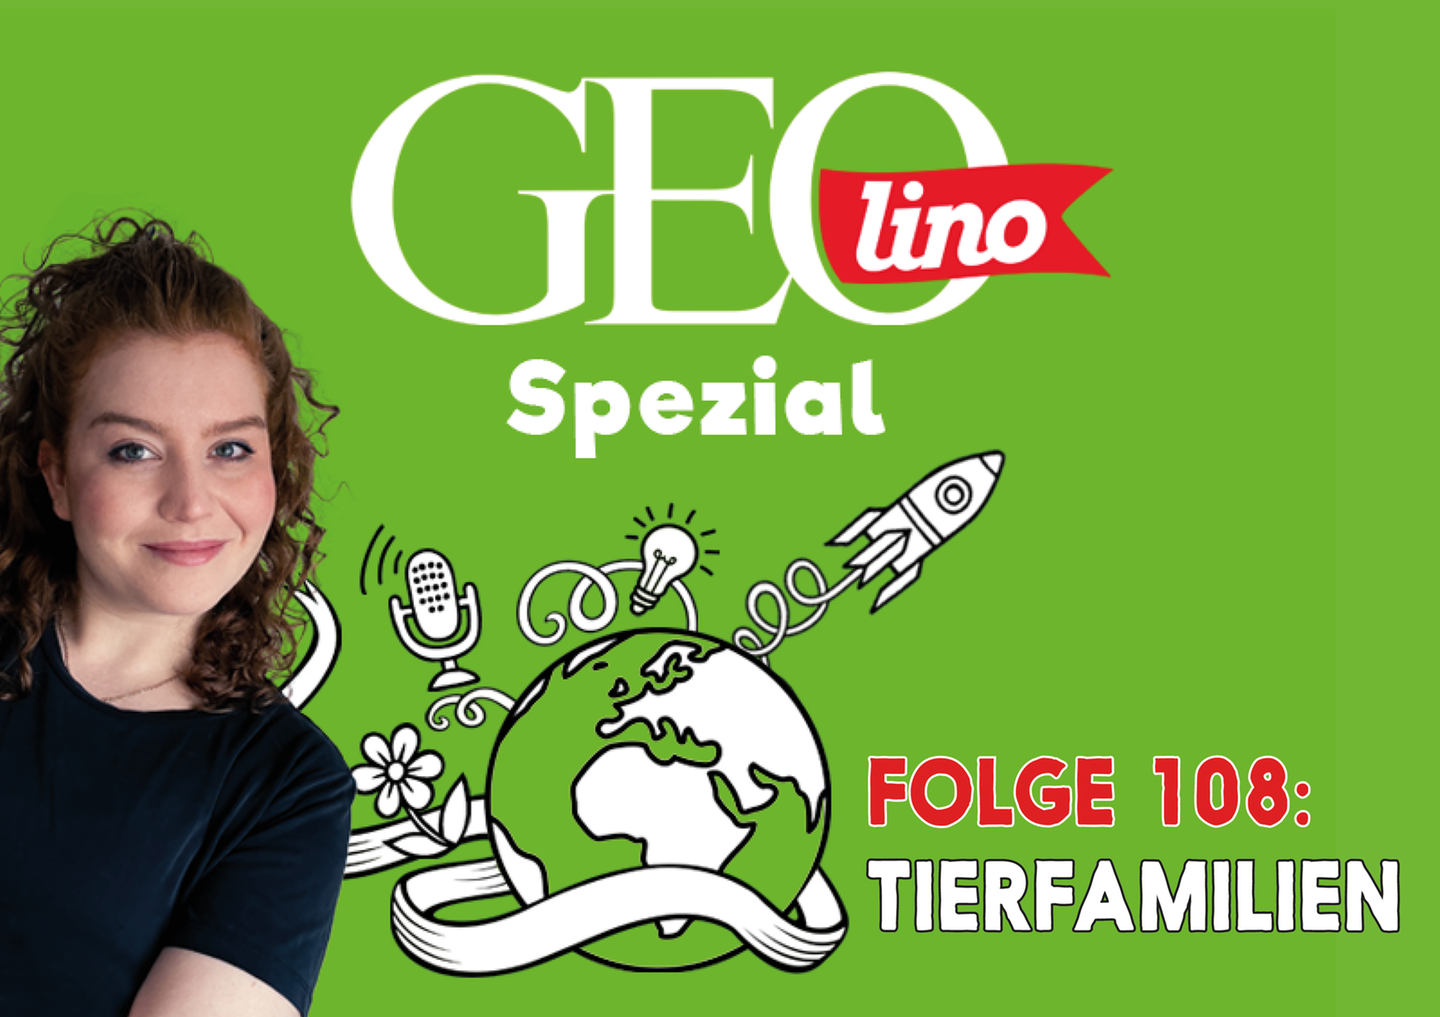 In Folge 108 unseres GEOlino-Podcasts geht es um Tierfamilien